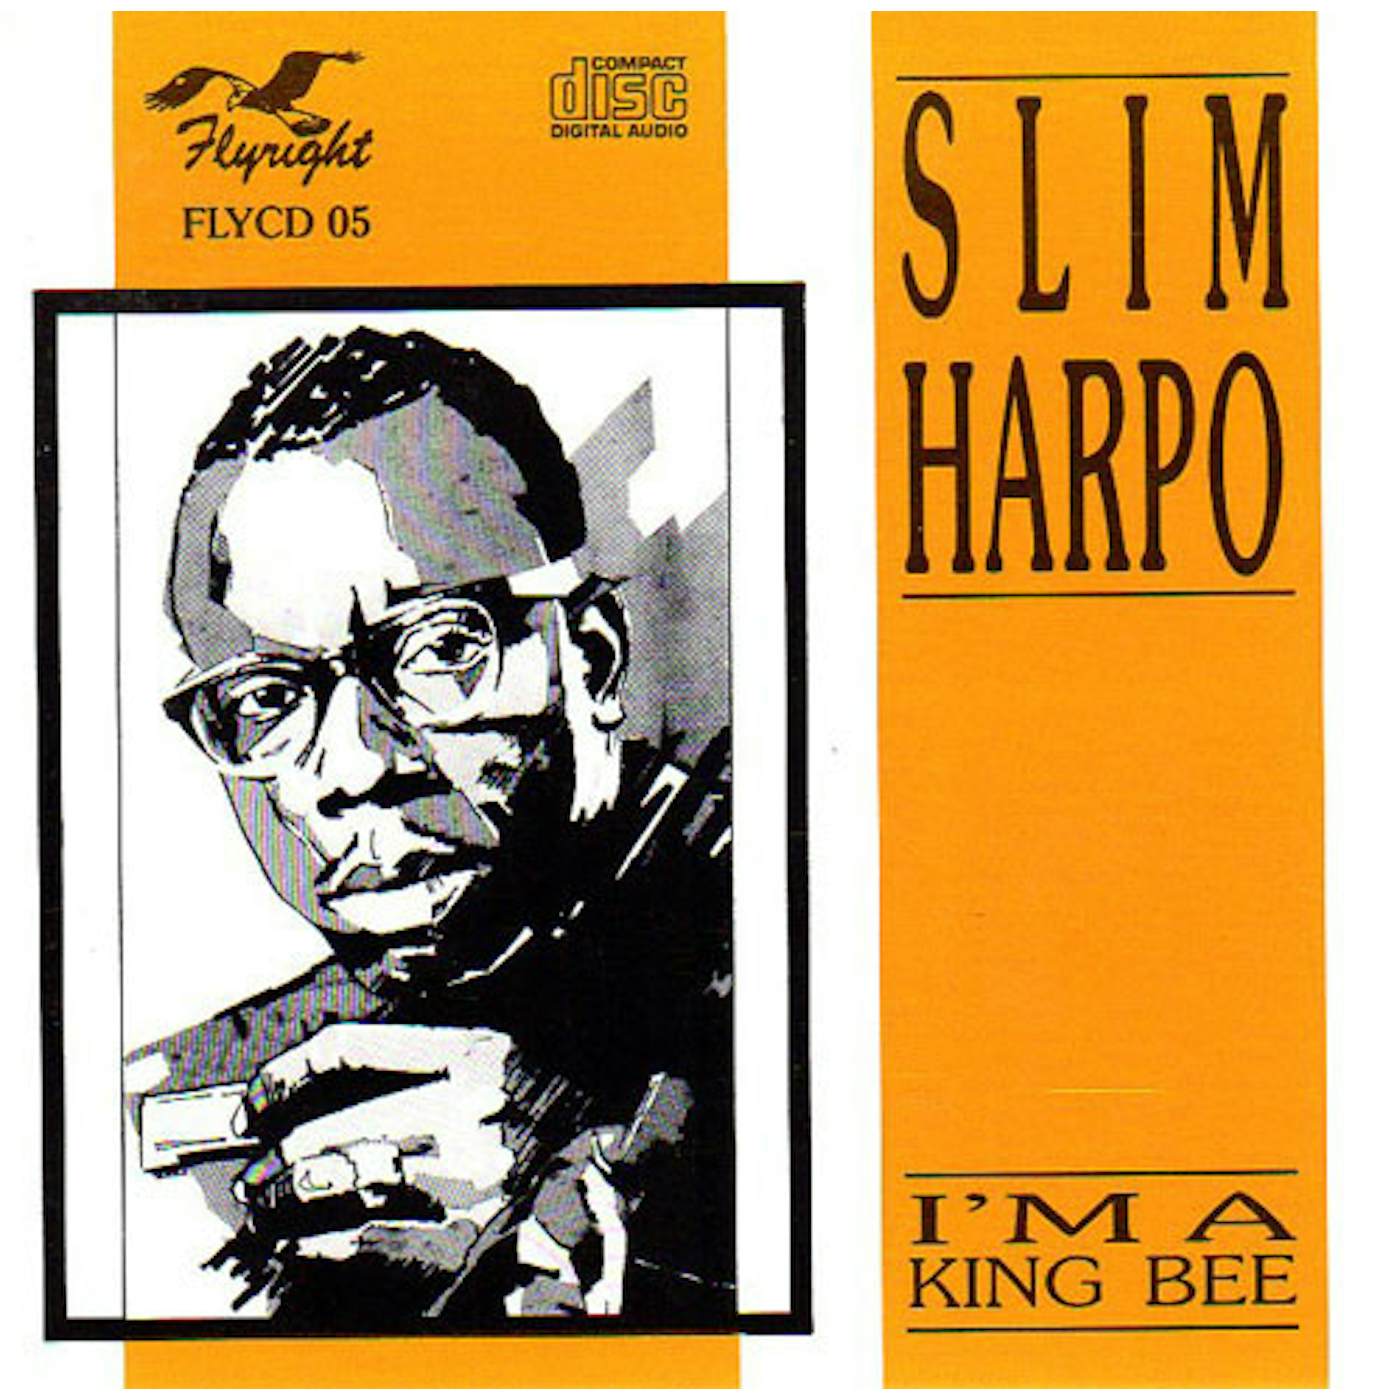 Slim Harpo I'm a King Bee Vinyl Record